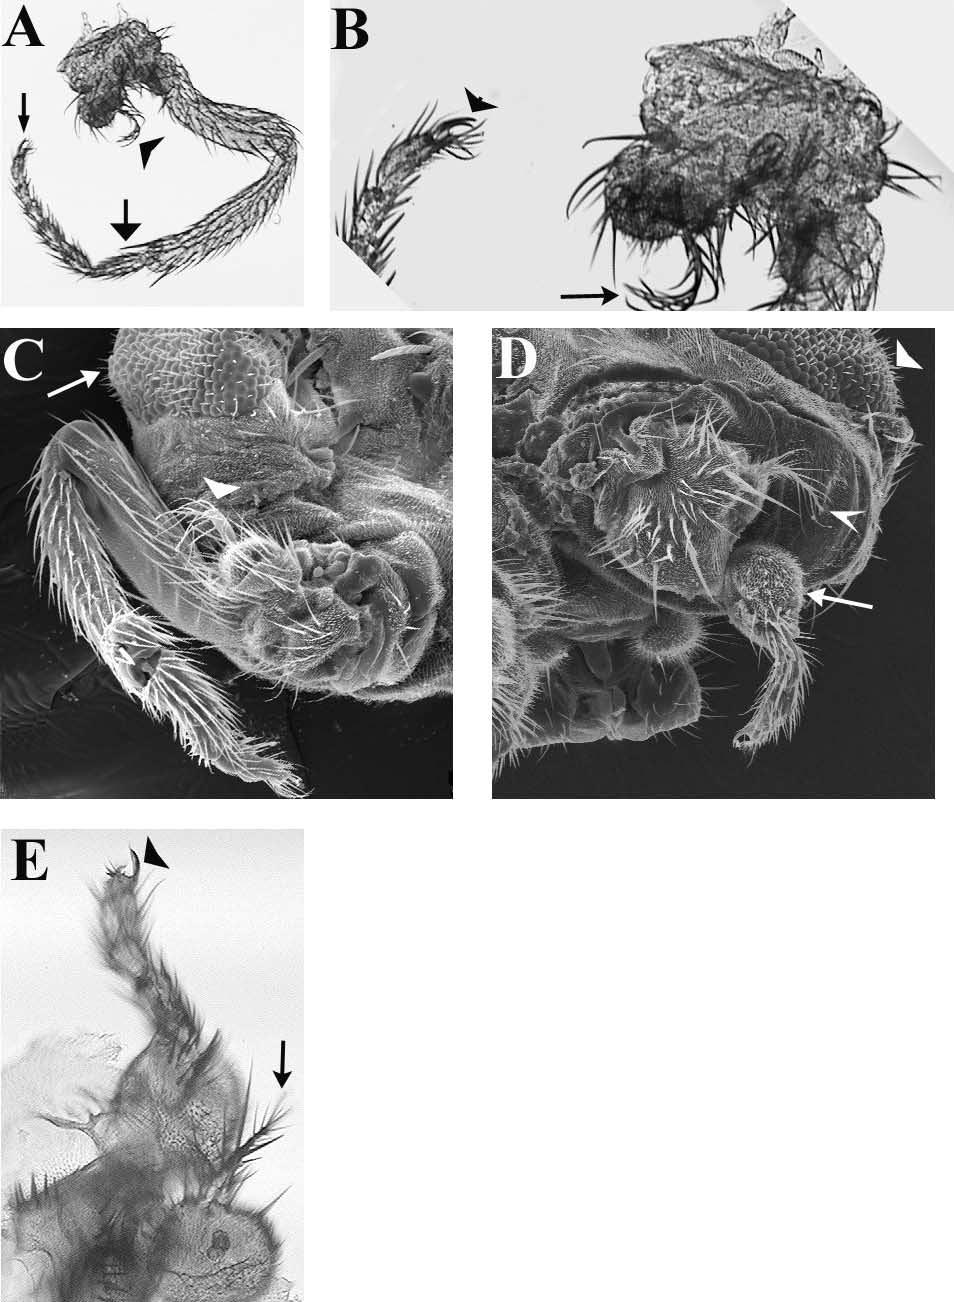 428 EVOLUTION & DEVELOPMENT Vol. 3, No. 6, November December 2001 Fig. 3. Expression of EN and hedgehog in obk and wild-type eyeantenna imaginal discs.